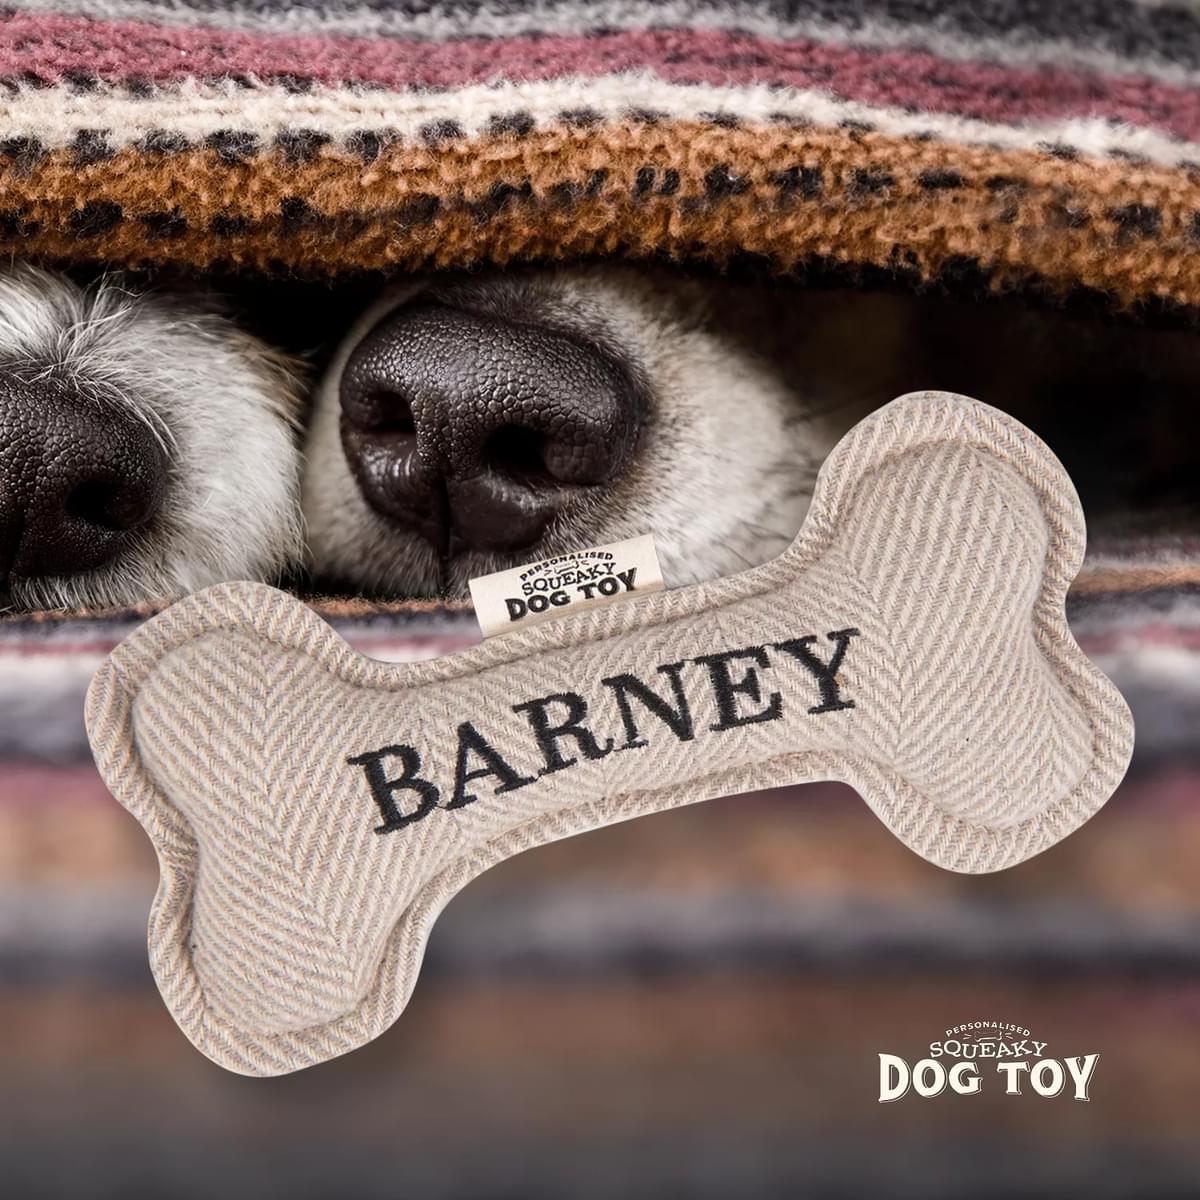 Named Squeaky Dog Toy- Barney. Bone shaped herringbone tweed pattern dog toy. 